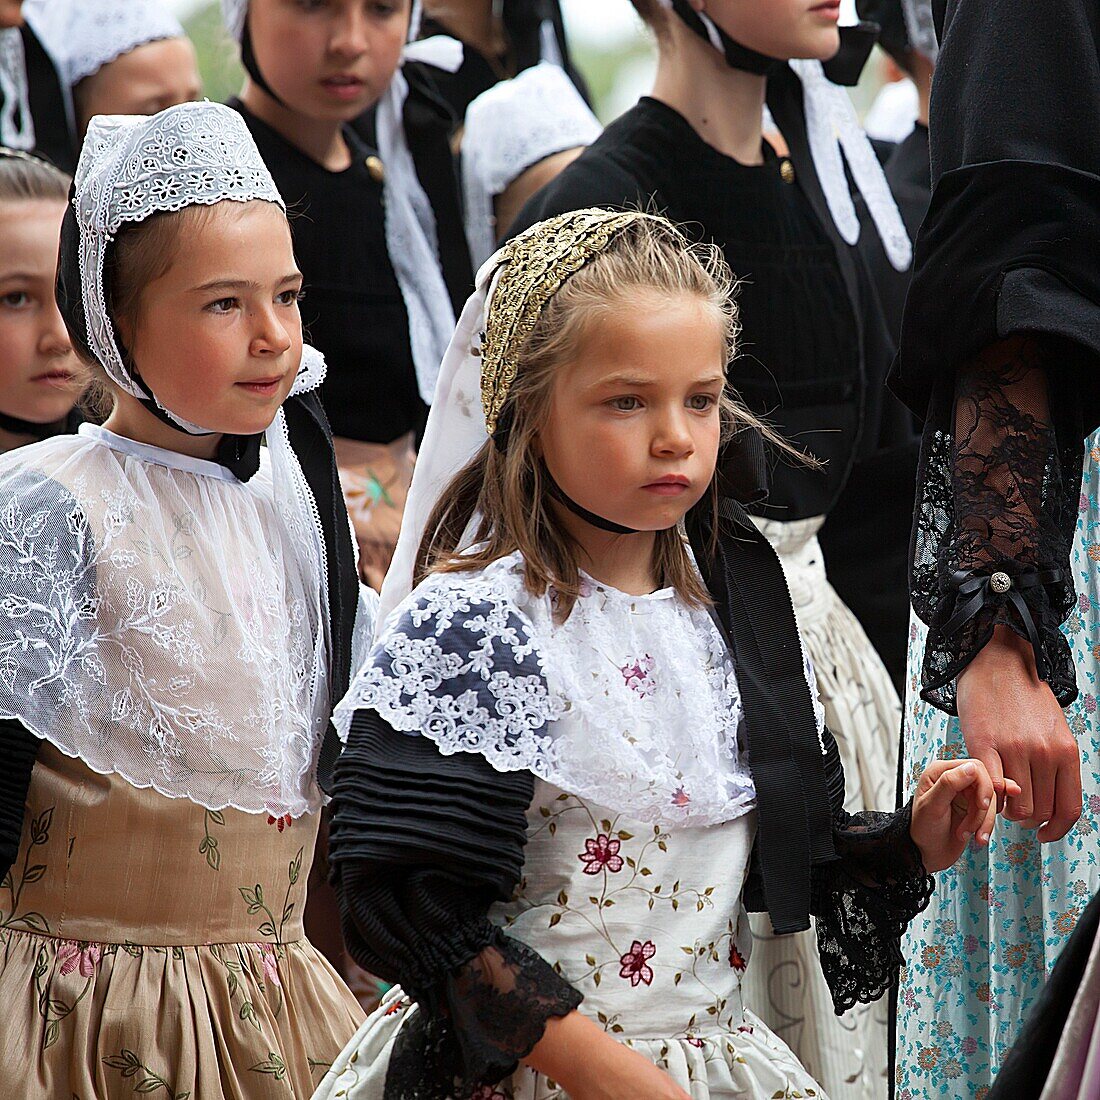 France,Finistere,Festival of the embroiderers of Pont l'Abbé,Children's dances of the Cercle Ar vro Vigoudenn of Pont l'Abbé